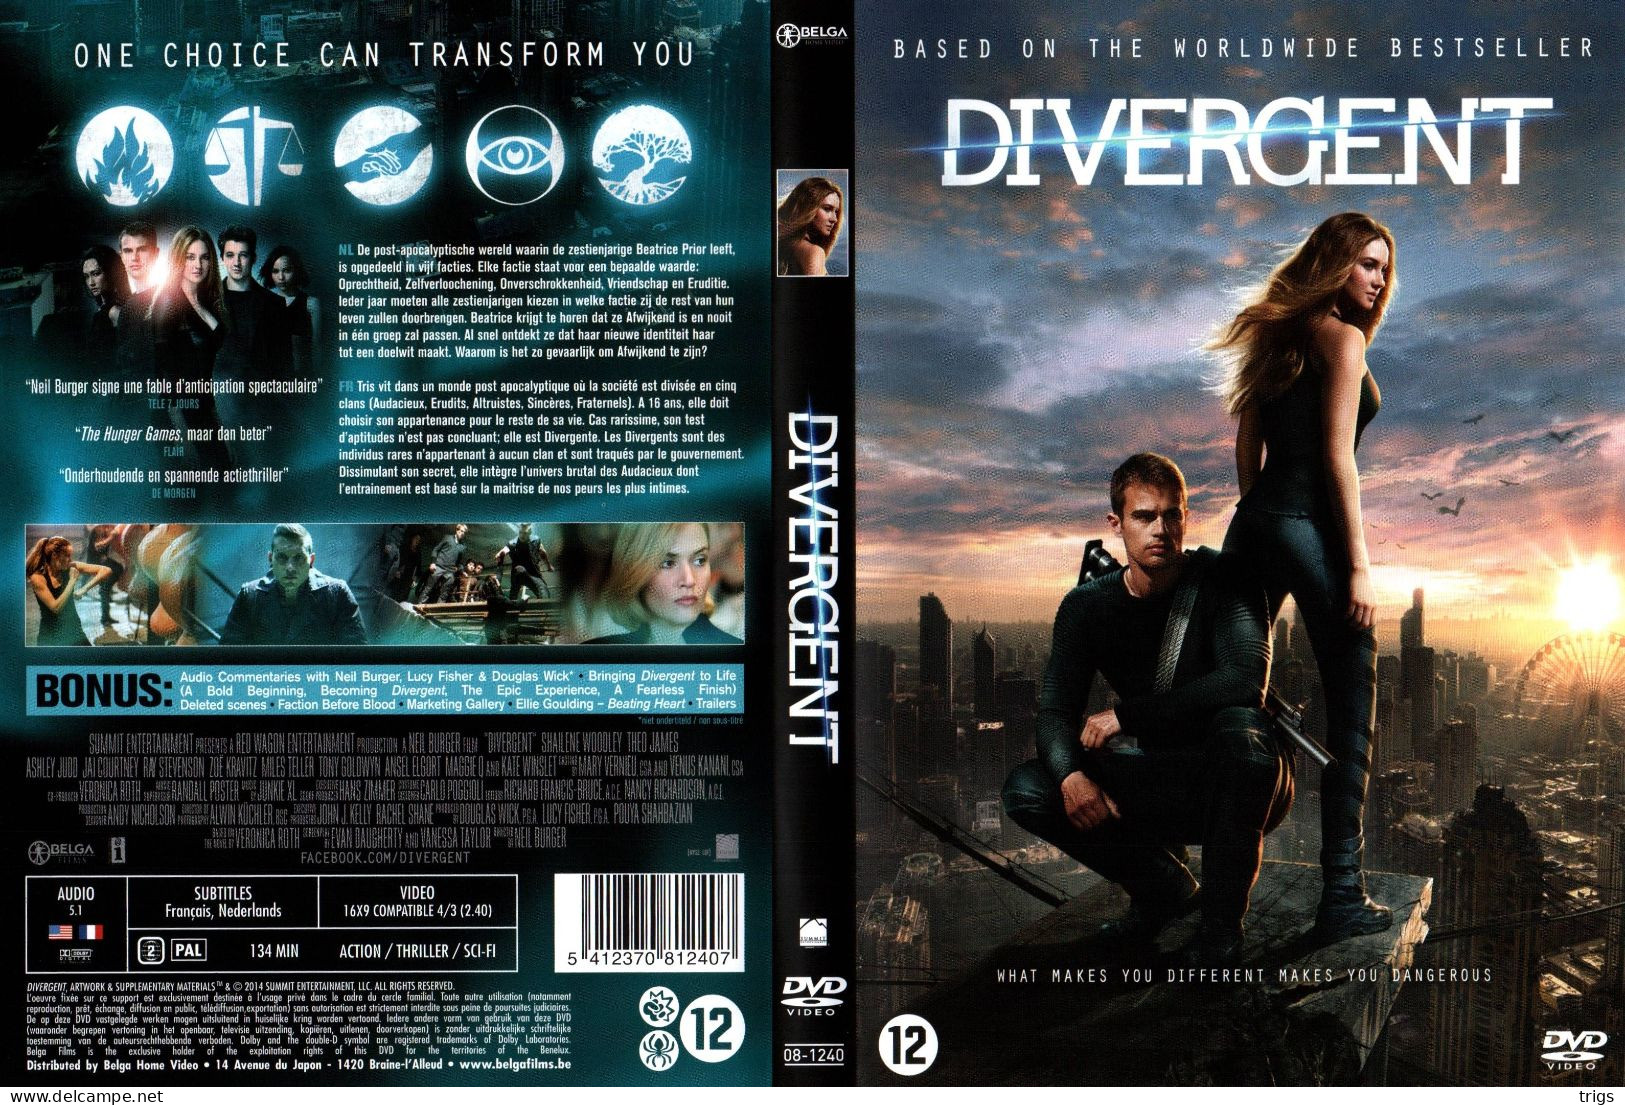 DVD - Divergent - Action & Abenteuer